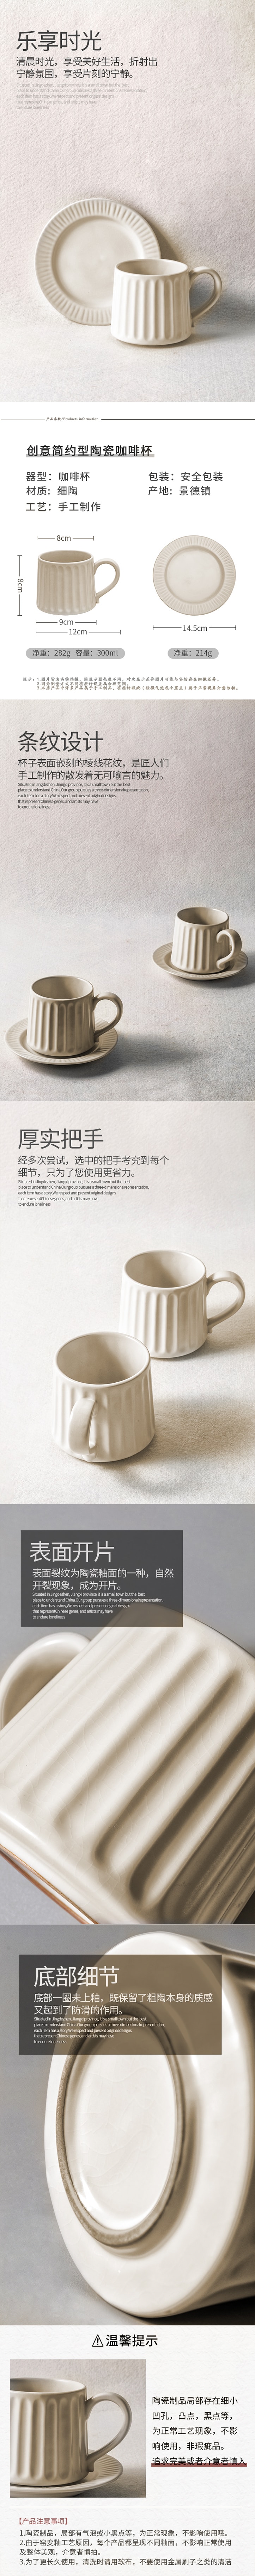 NESTLADY 创意简约型陶瓷咖啡杯